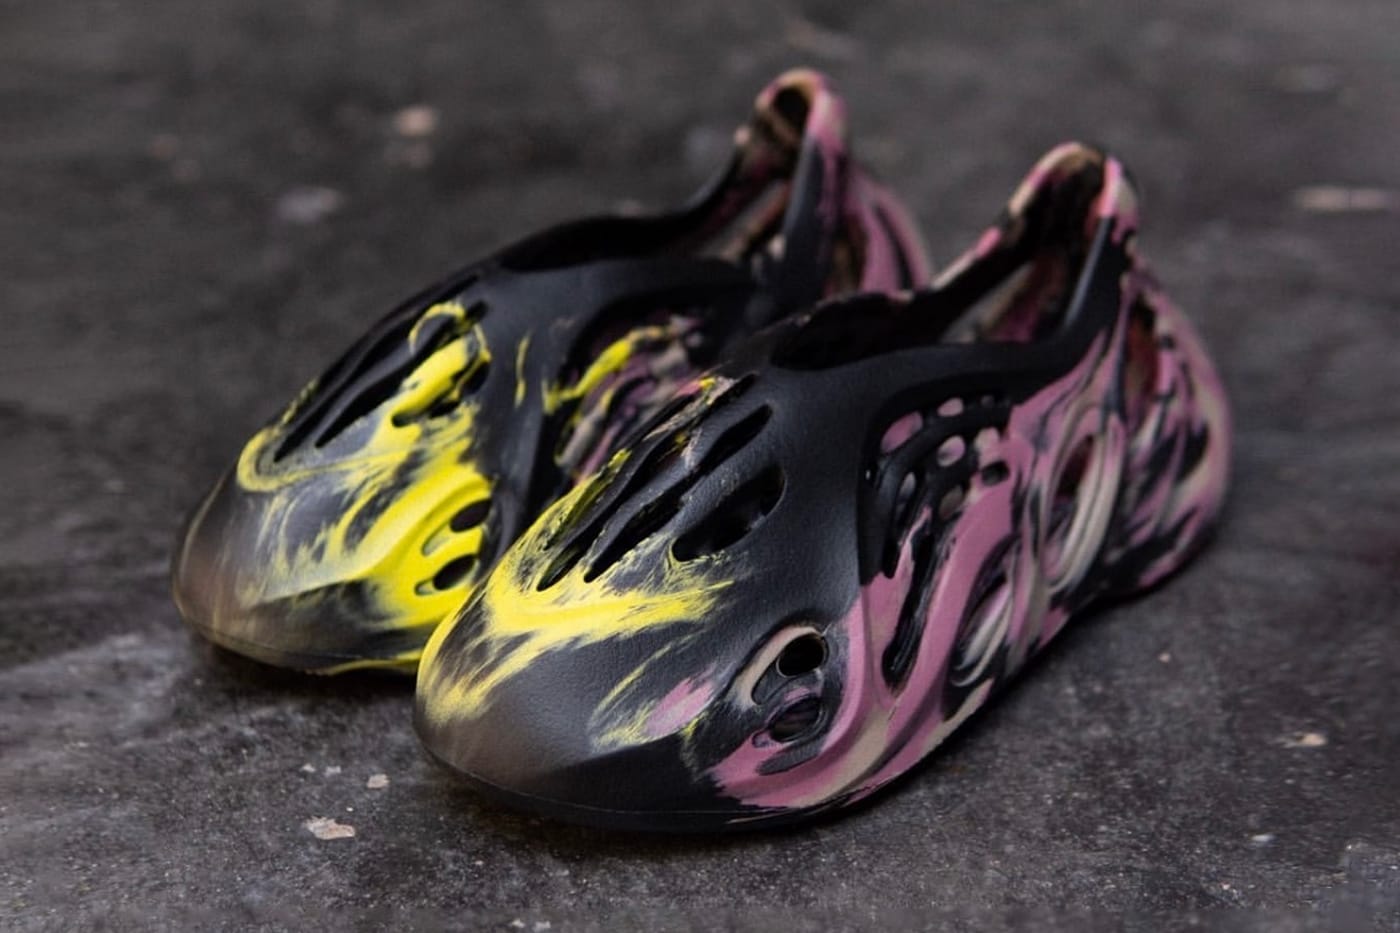 adidas YEEZY Foam Runner "MX Carbon" Closer Look | Hypebeast